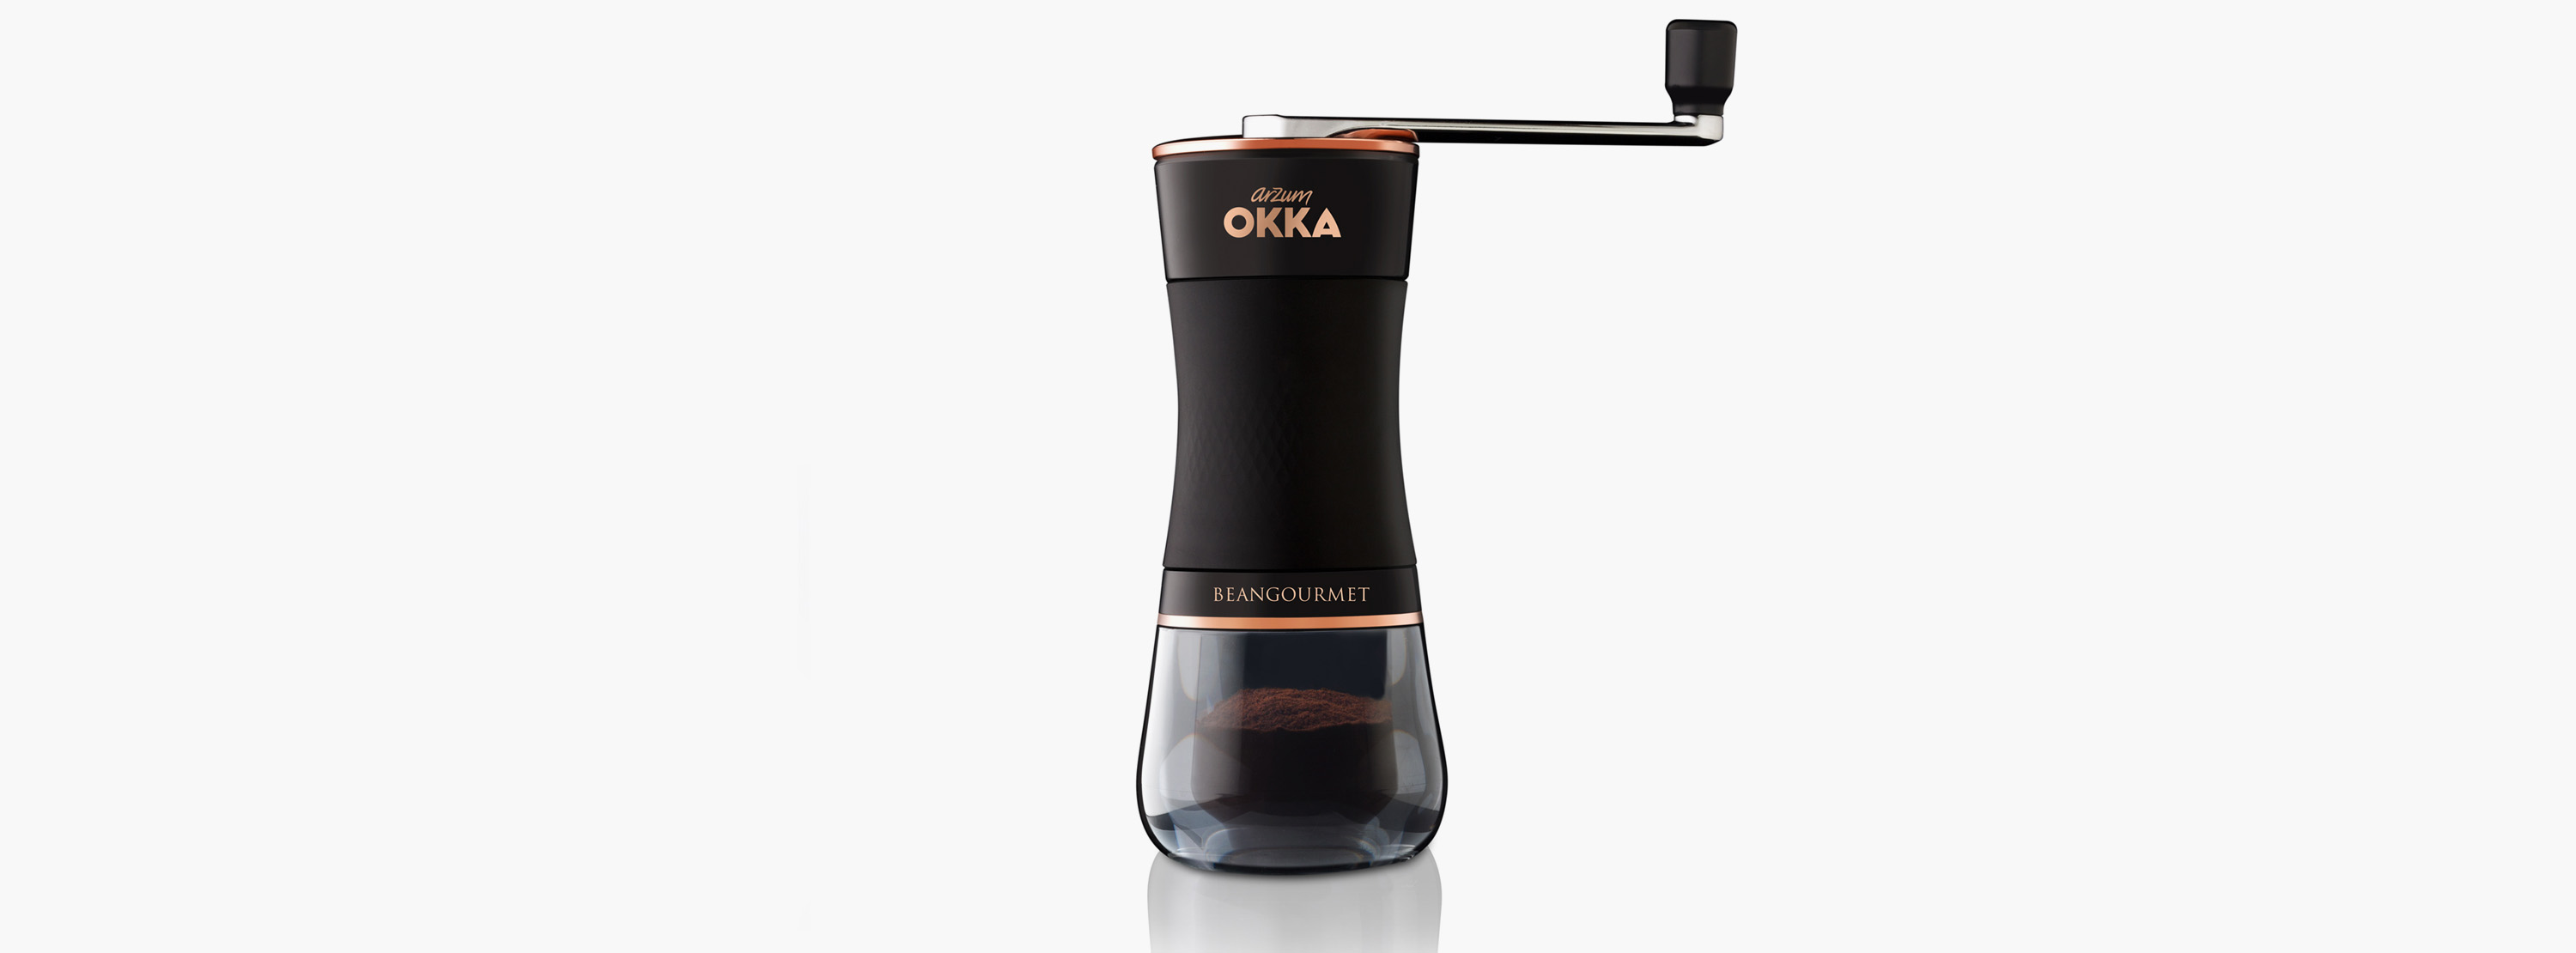 Arzum OK003 OKKA BEANGOURMET Manual Coffee Grinder Black-copper Medium 